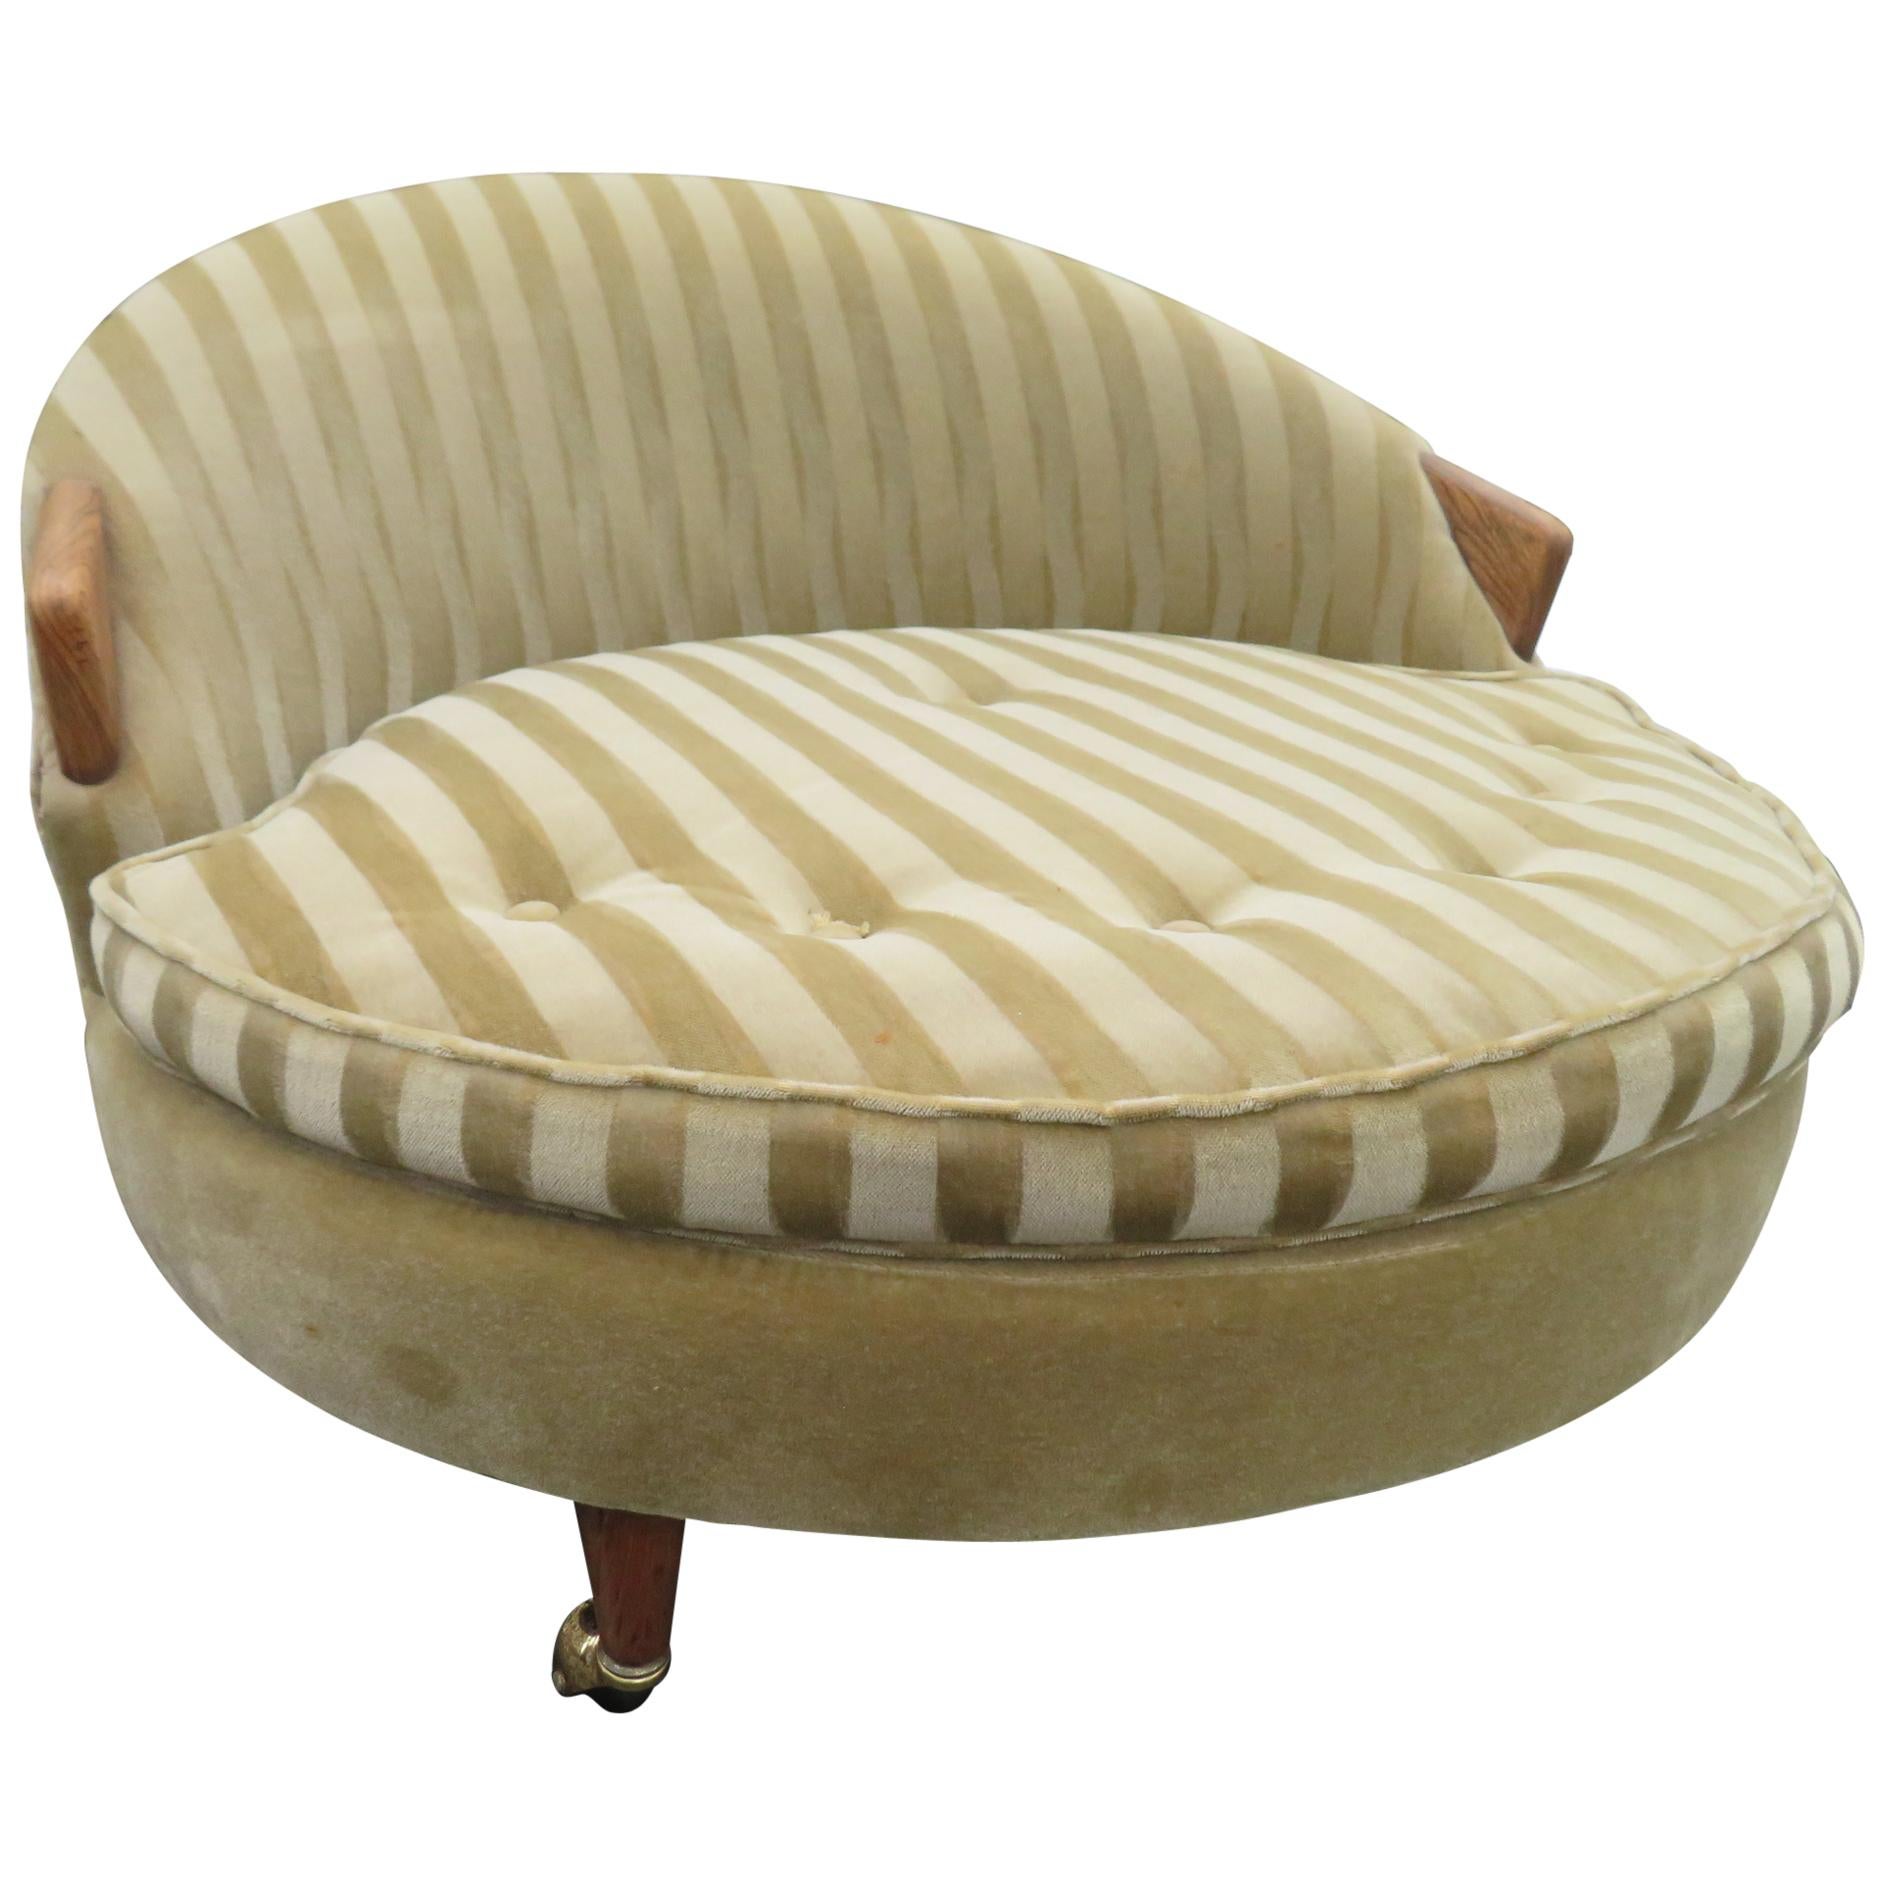 Wonderful Adrian Pearsall "Havana" Circular Lounge Chair Mid-Century Modern